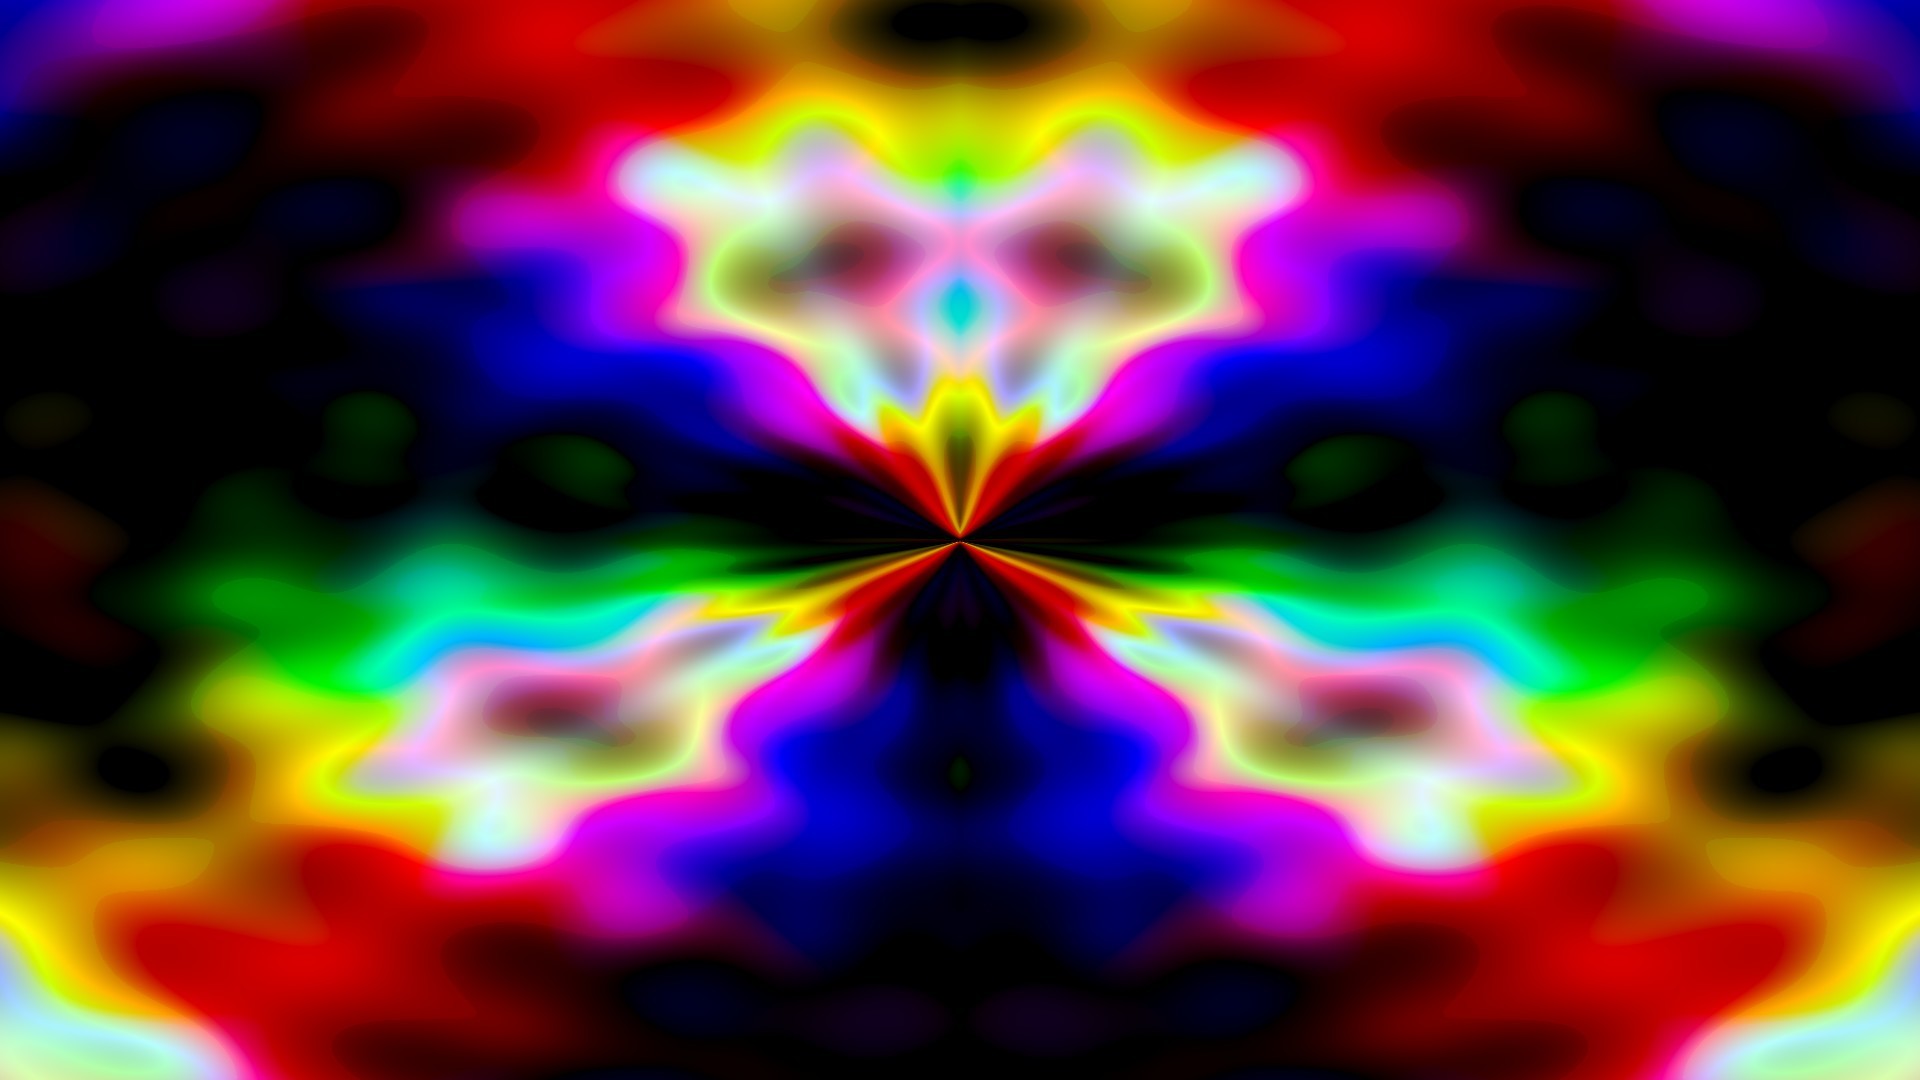 coole computer hintergrundbilder,fraktale kunst,psychedelische kunst,licht,symmetrie,muster